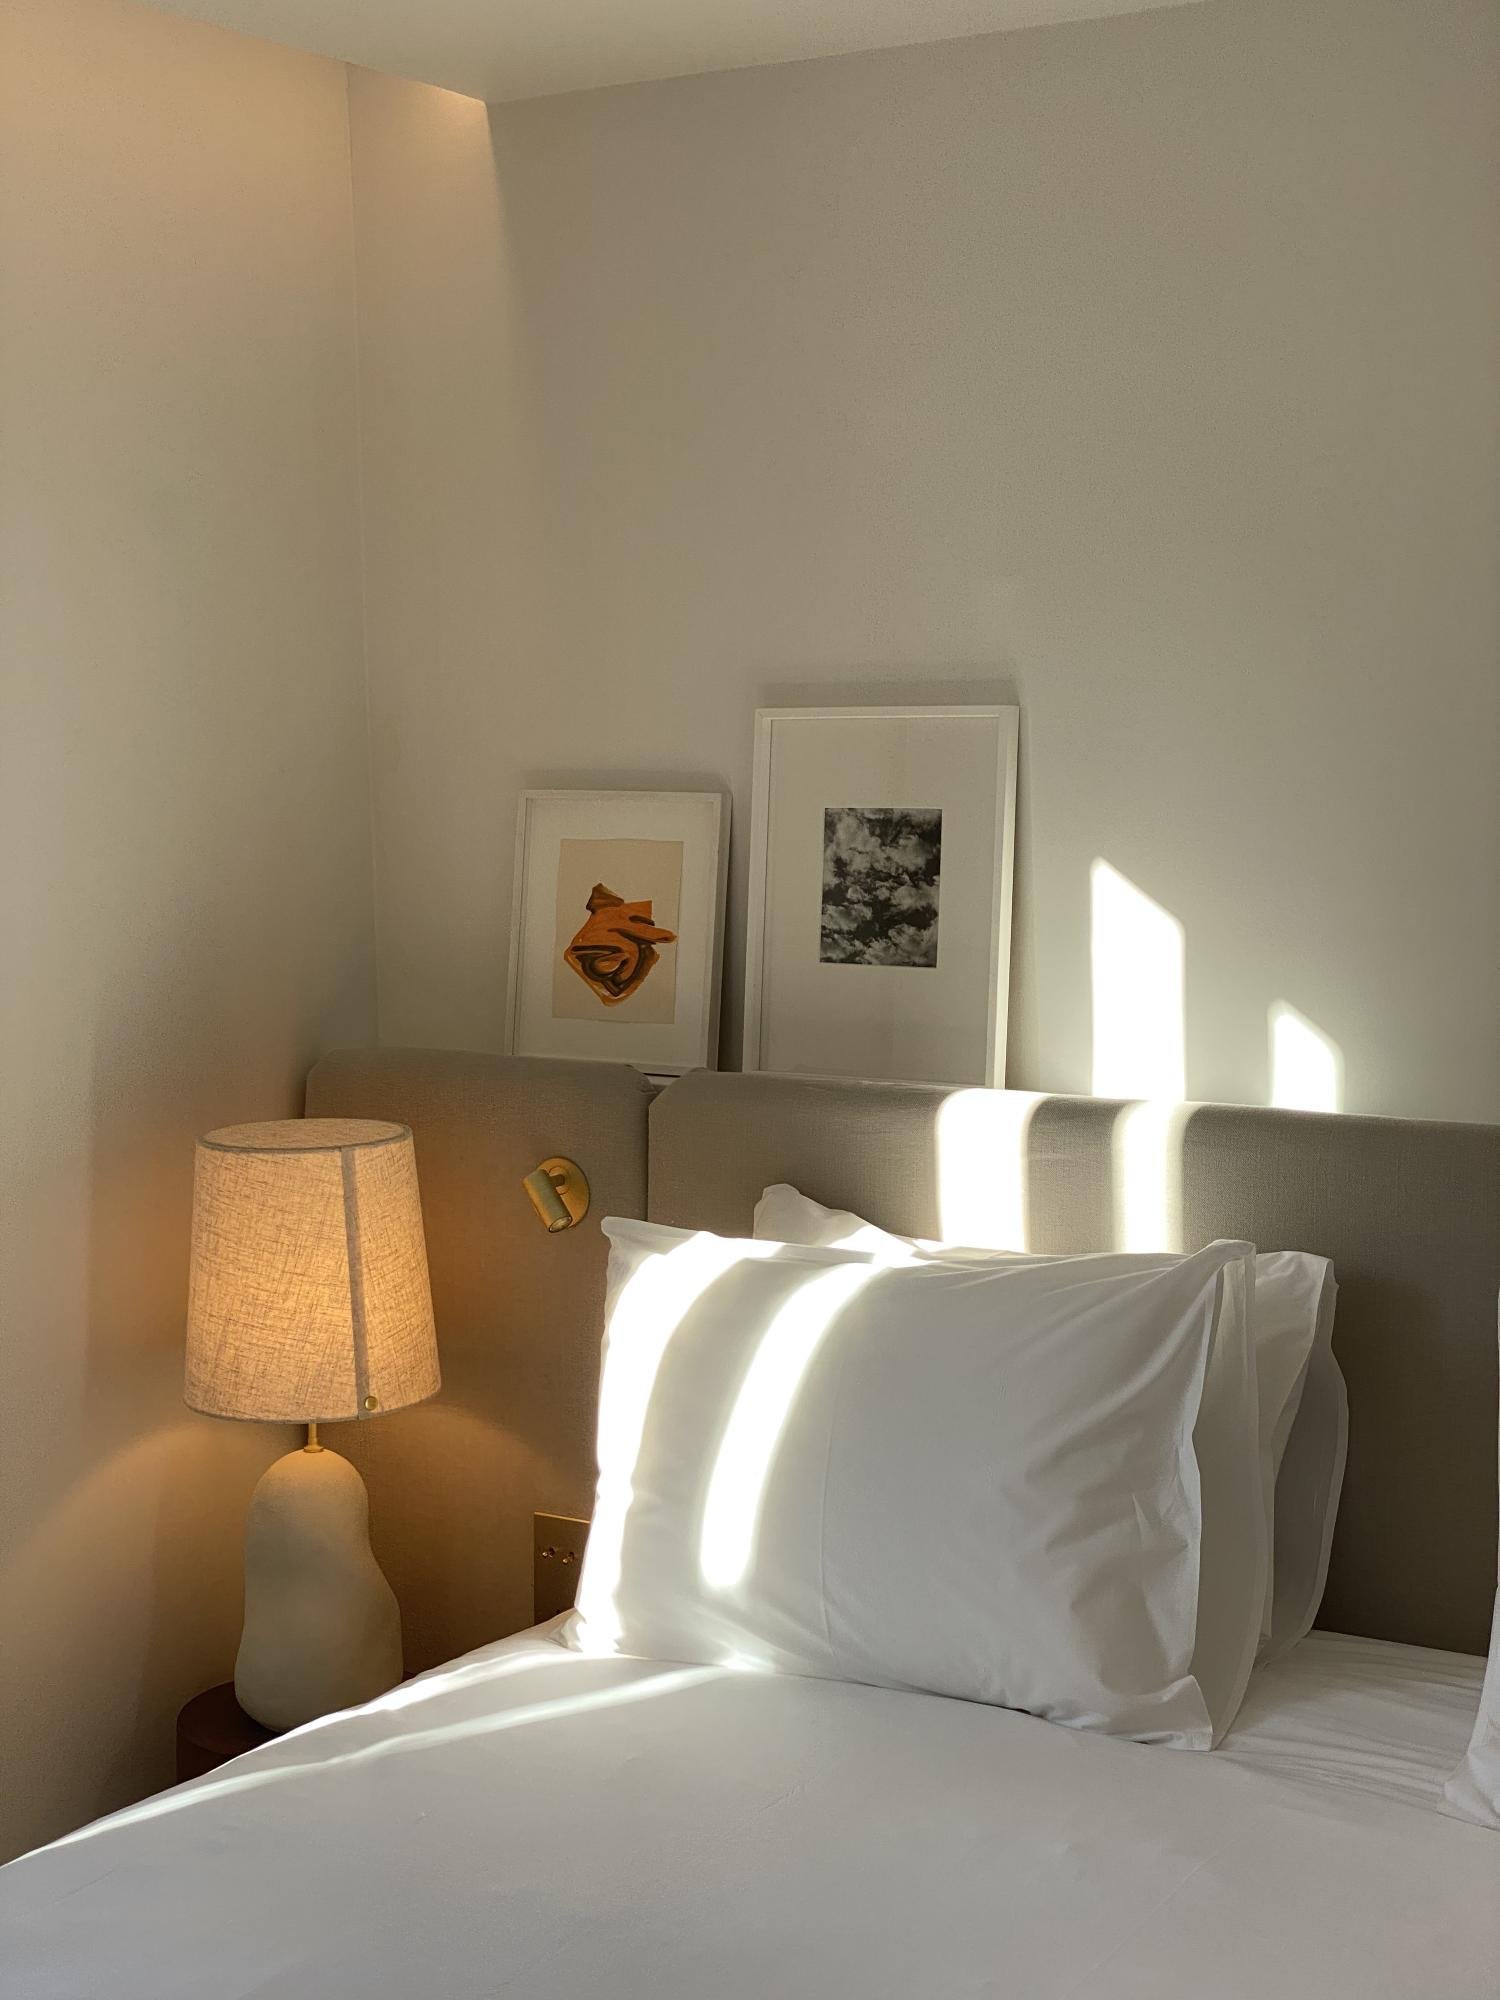 Hôtel Nuage Paris | Bed lamps Deluxe room balcony